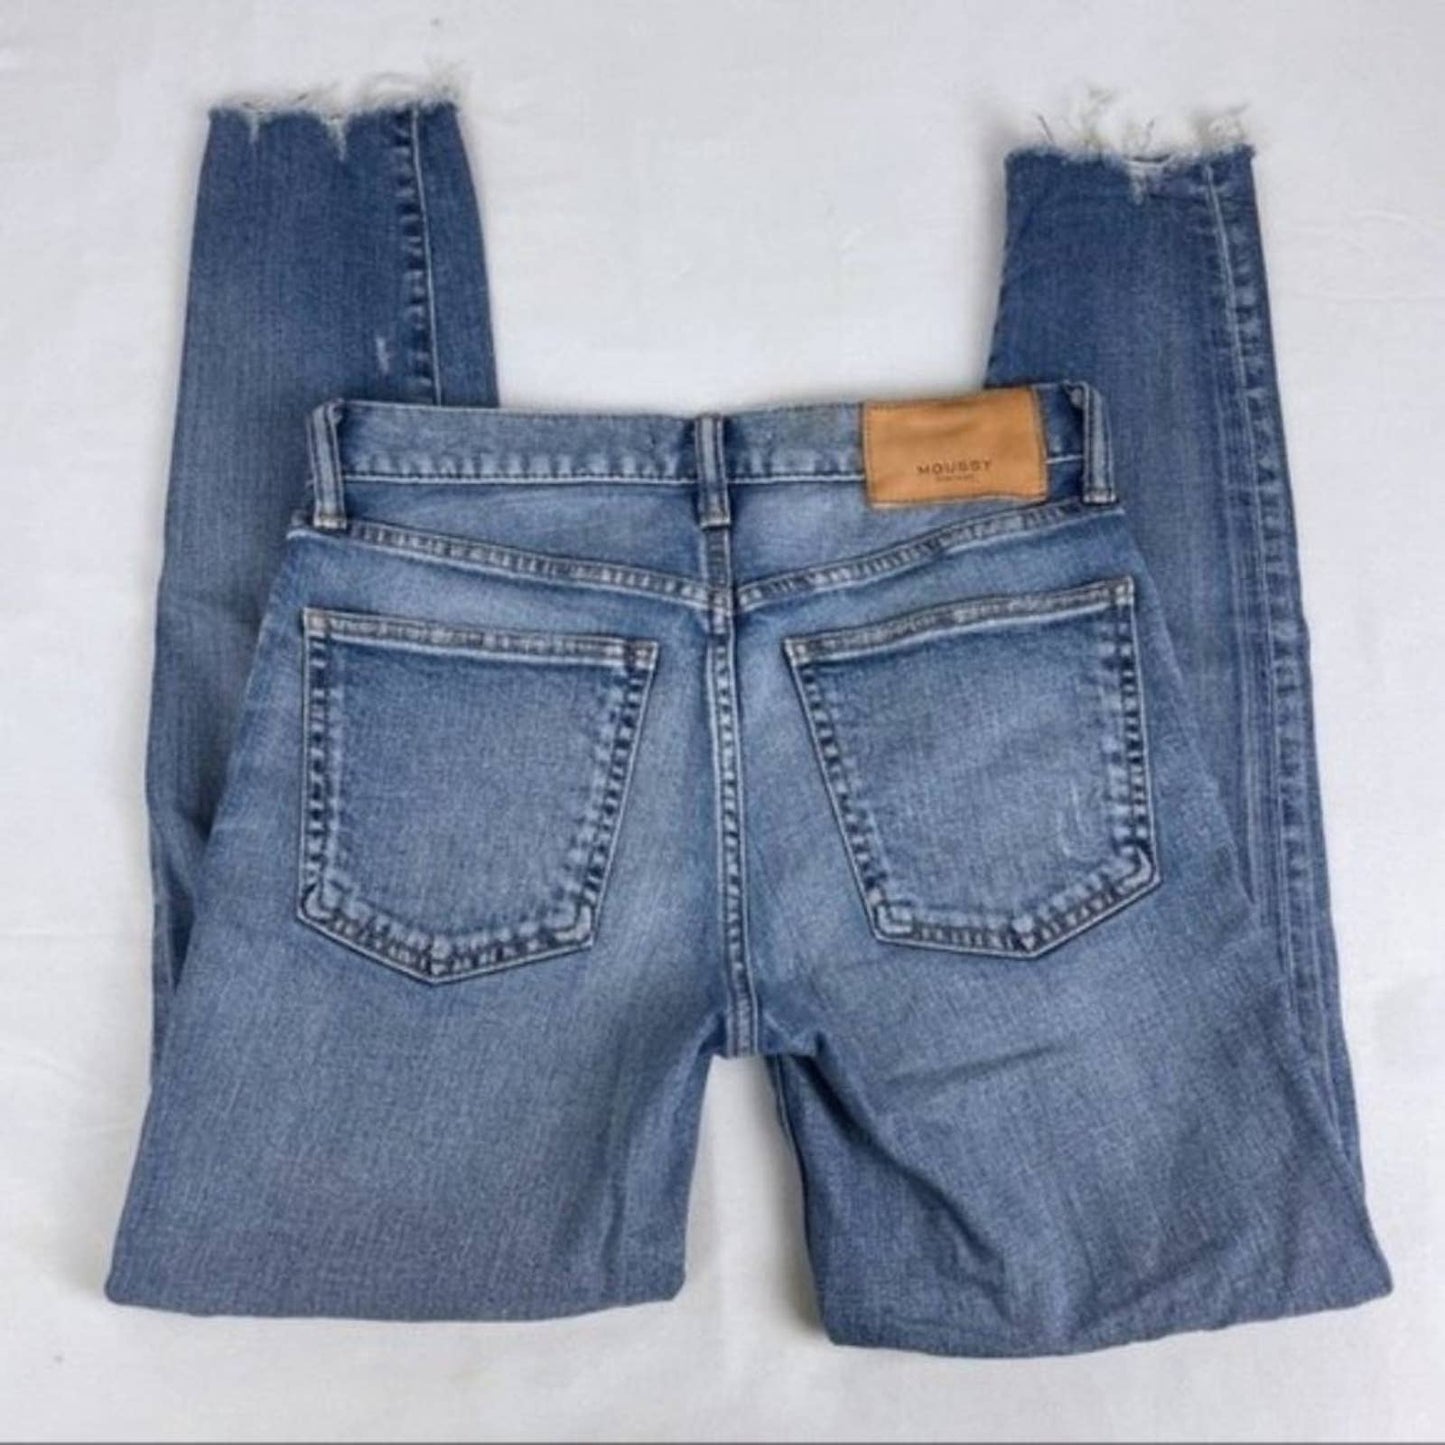 Moussy Vintage Tyrone Skinny Ankle Raw Hem Light Blue Jeans Mid-Rise Style 025ESC12-1110 Size 25